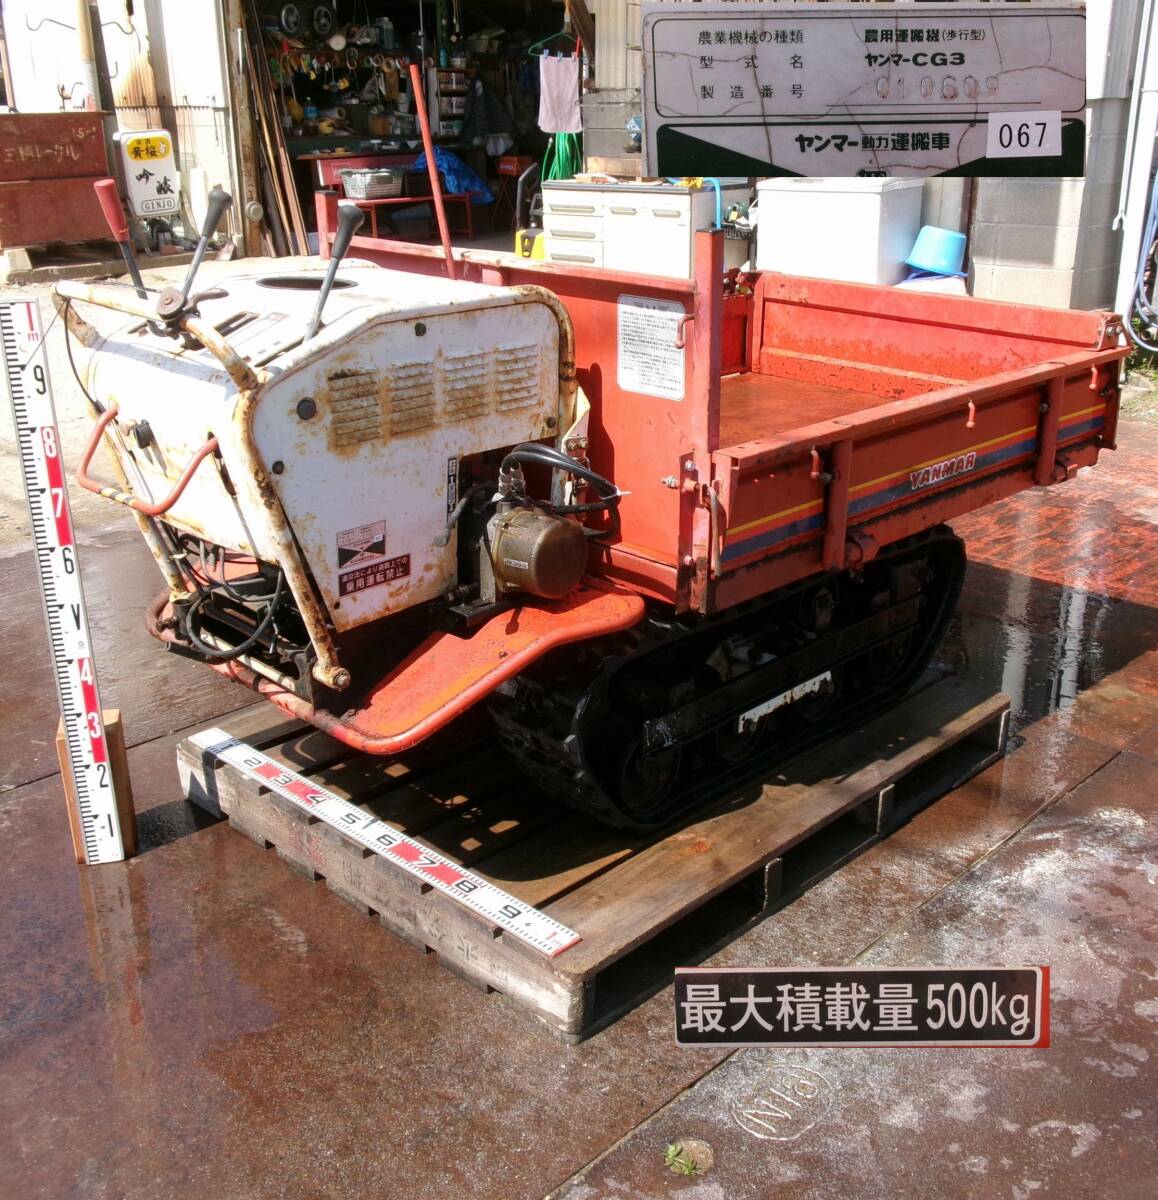 067# Yanmar lift dump transportation car CG3 500kg Hiroshima #